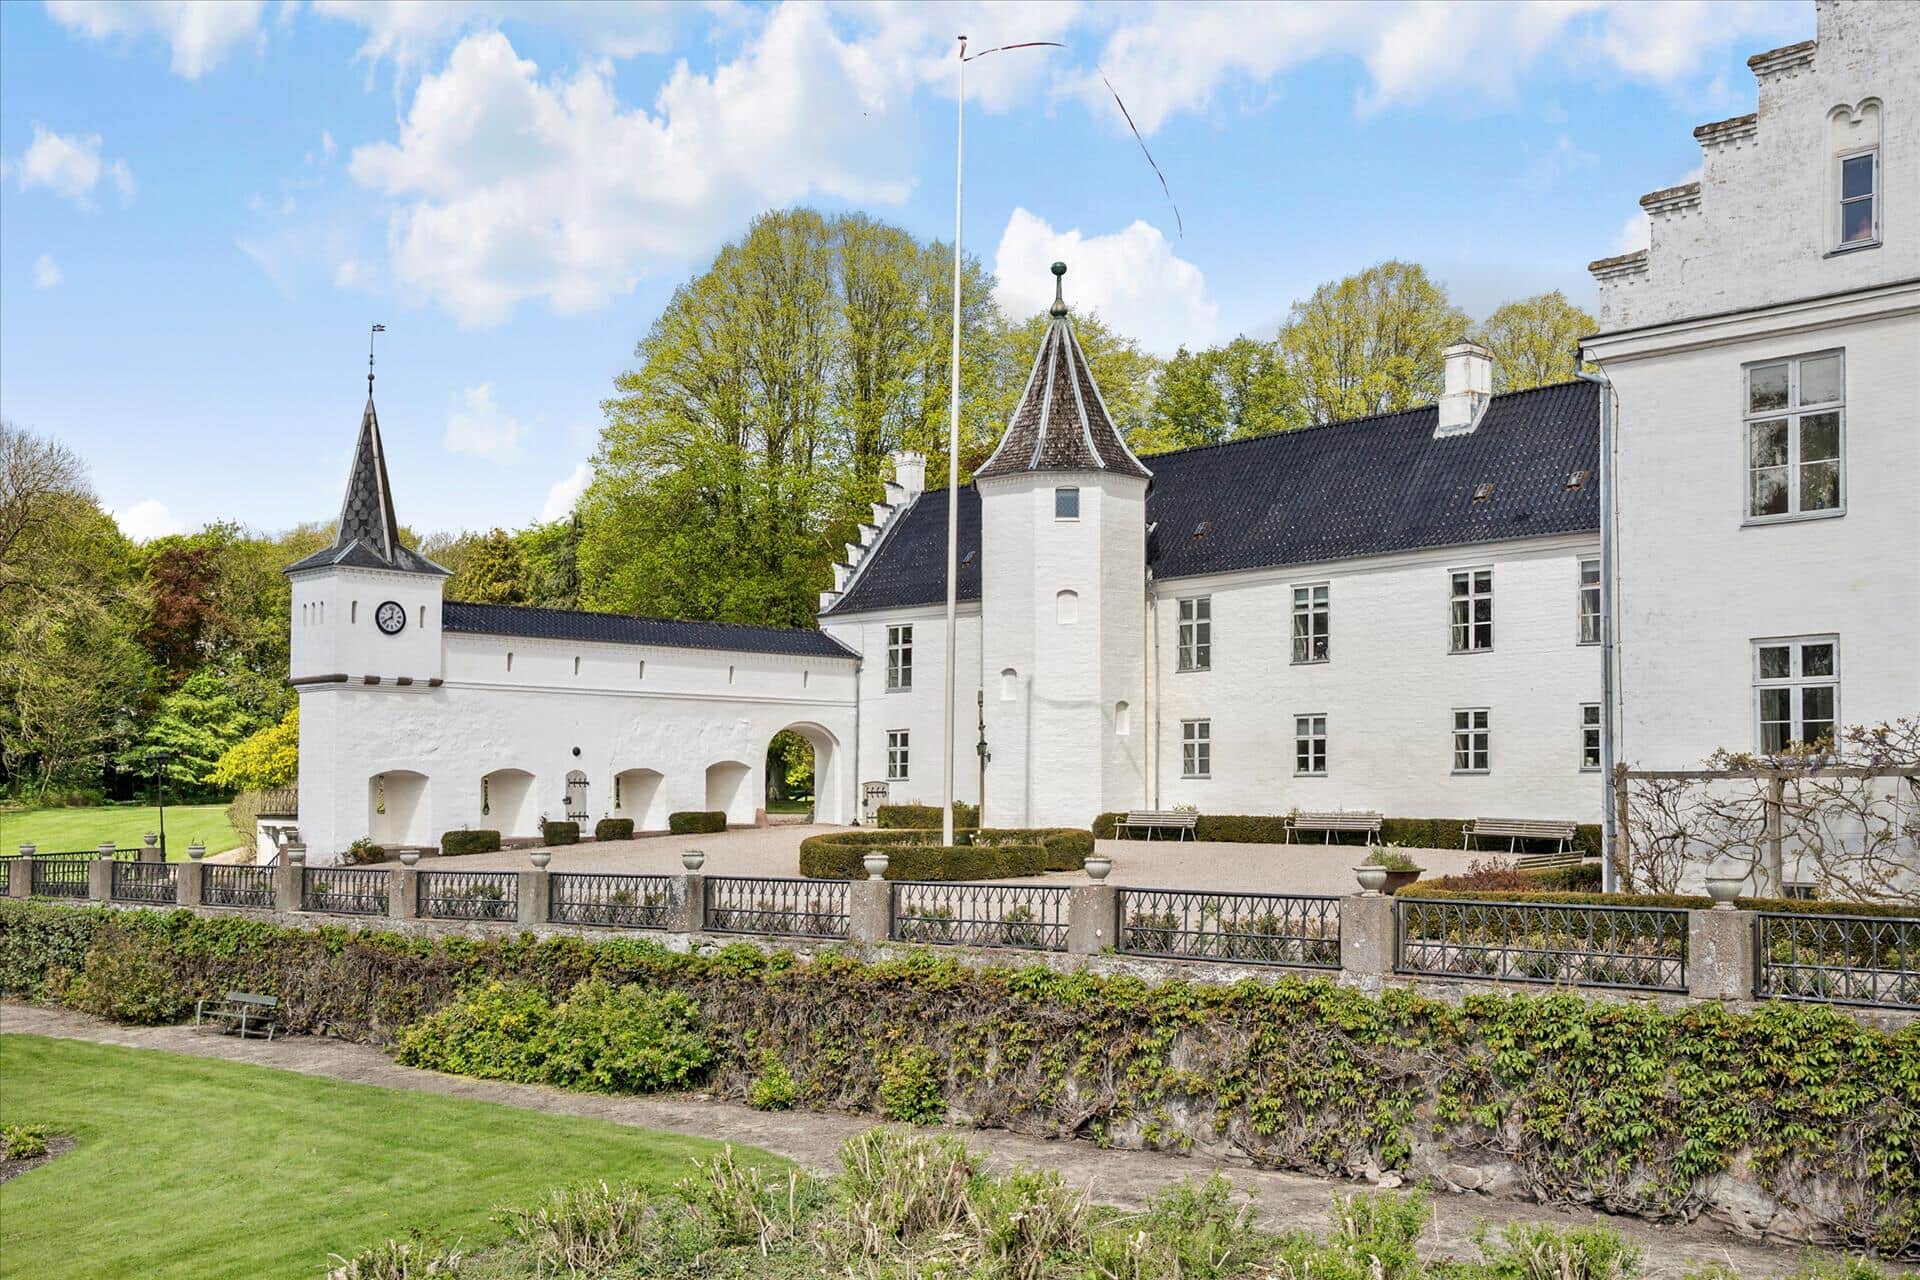 Dallund Slot - Castle accommodation Søndersø, Funen with surrounding